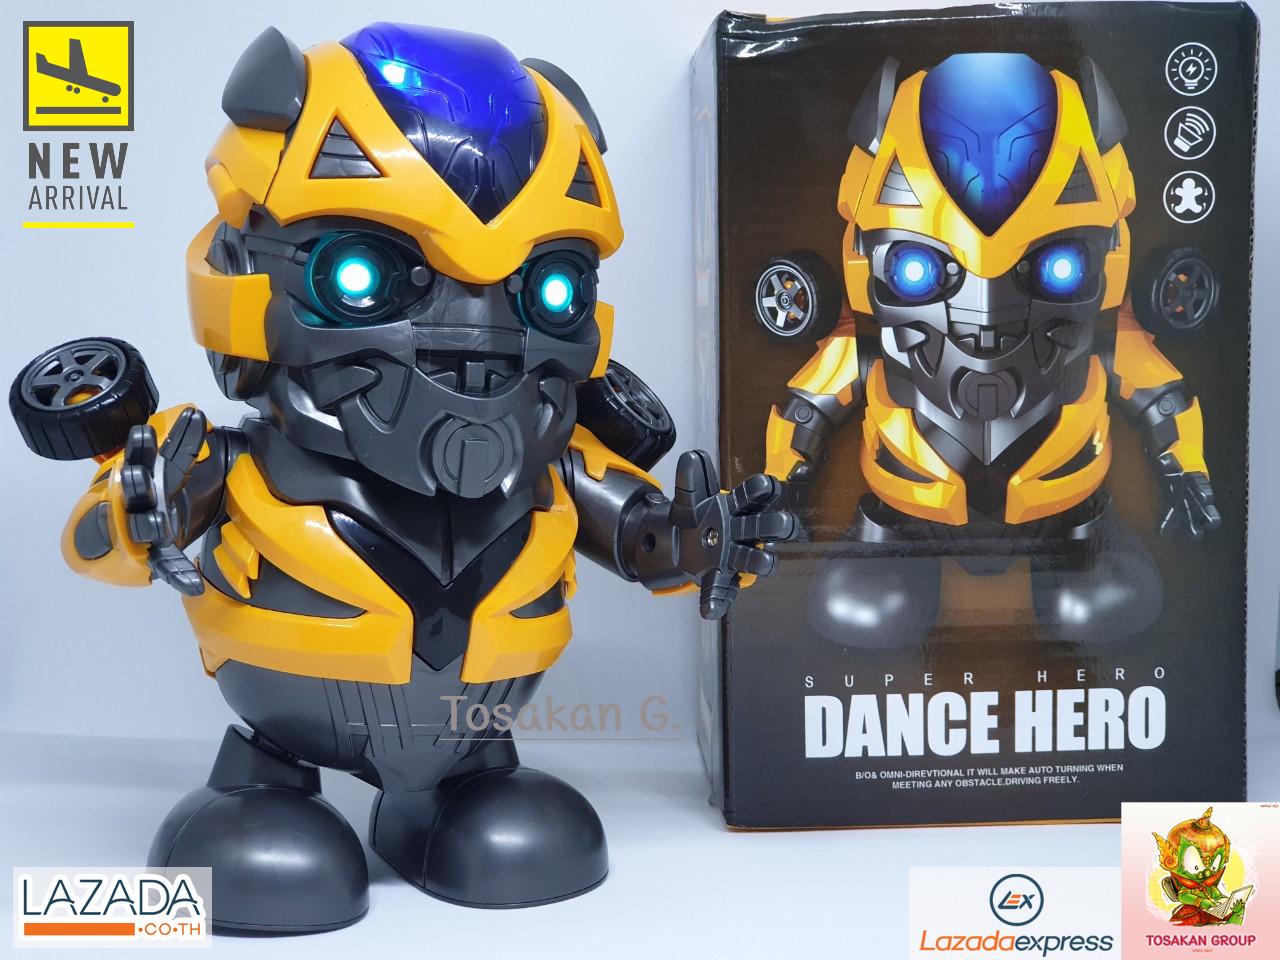 Bumble Bee บัมเบิ้ลบี หุ่นจักรกลต่างดาว หุ่นขยับได้ เต้นได้ มีไฟ สะสมหรือเก็บโชว์ก็ดี Dance Hero